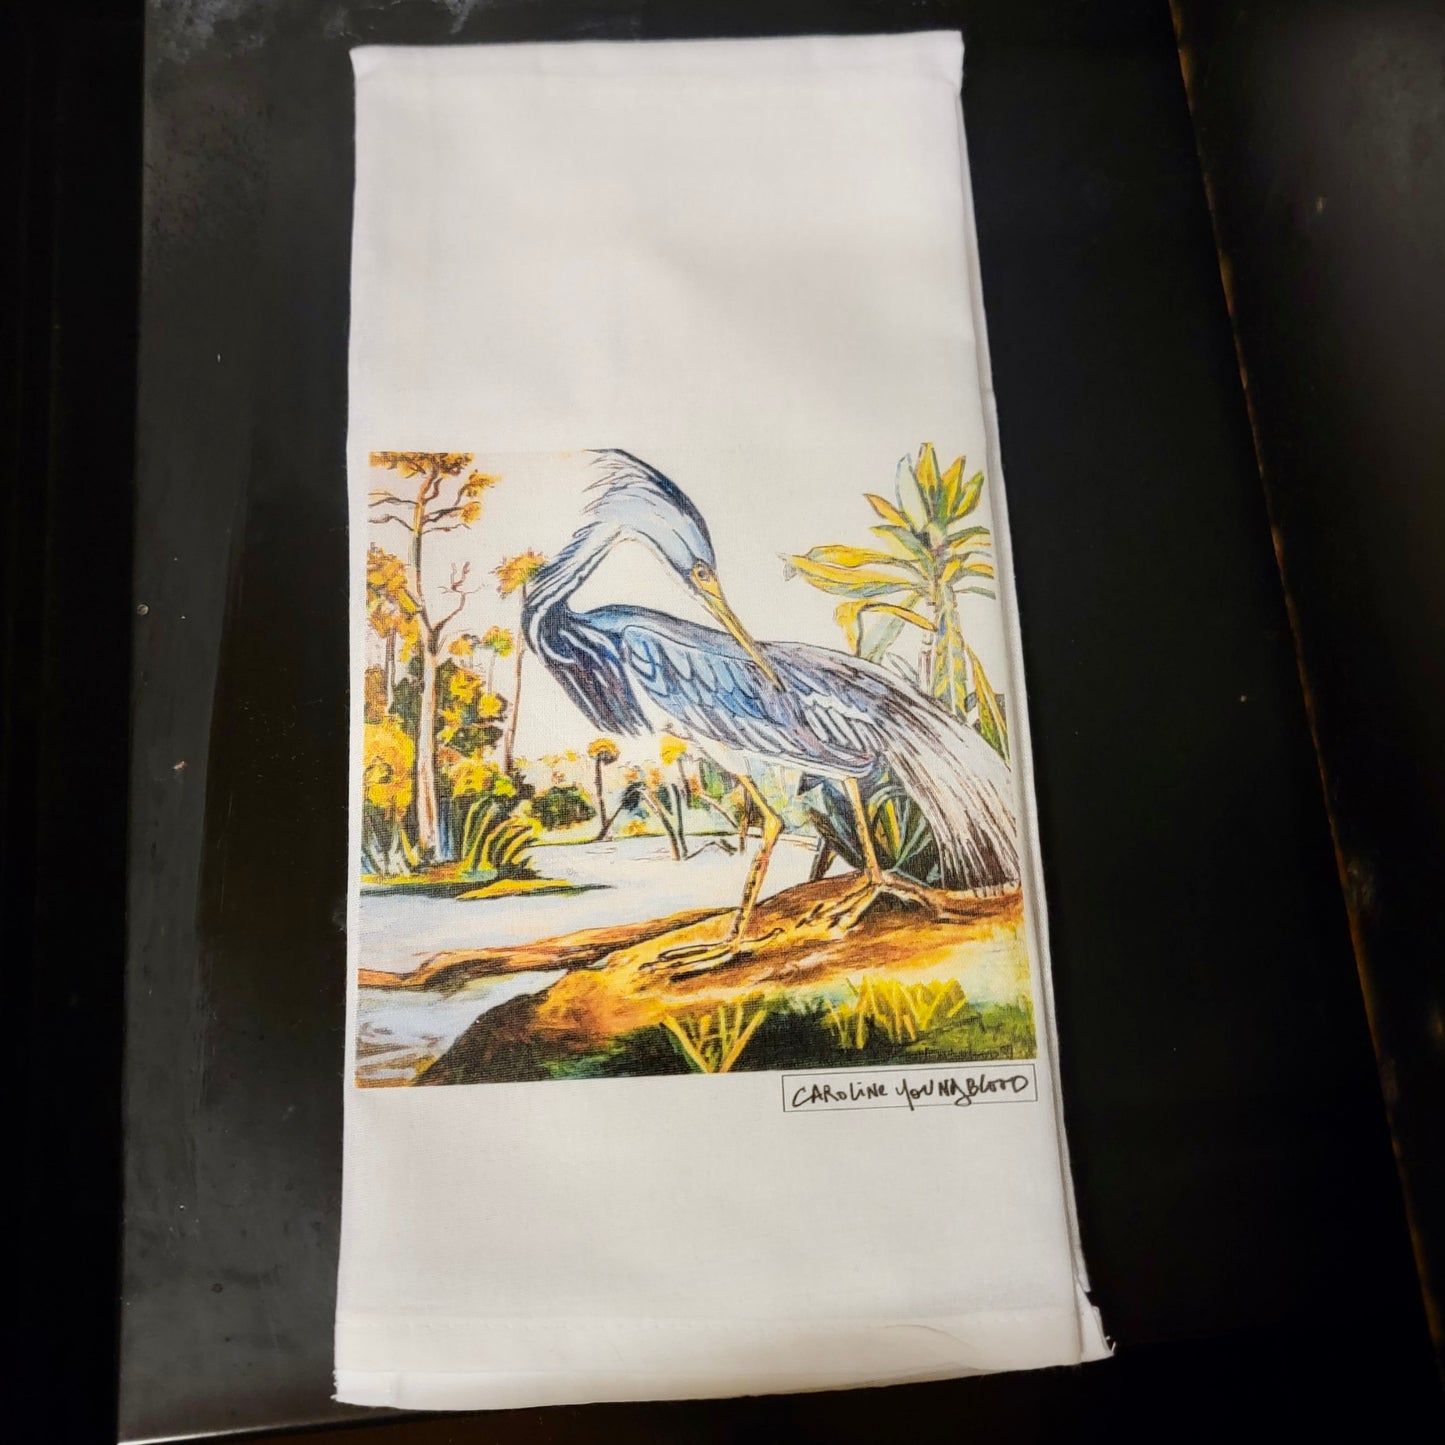 Blue Heron Tea Towel